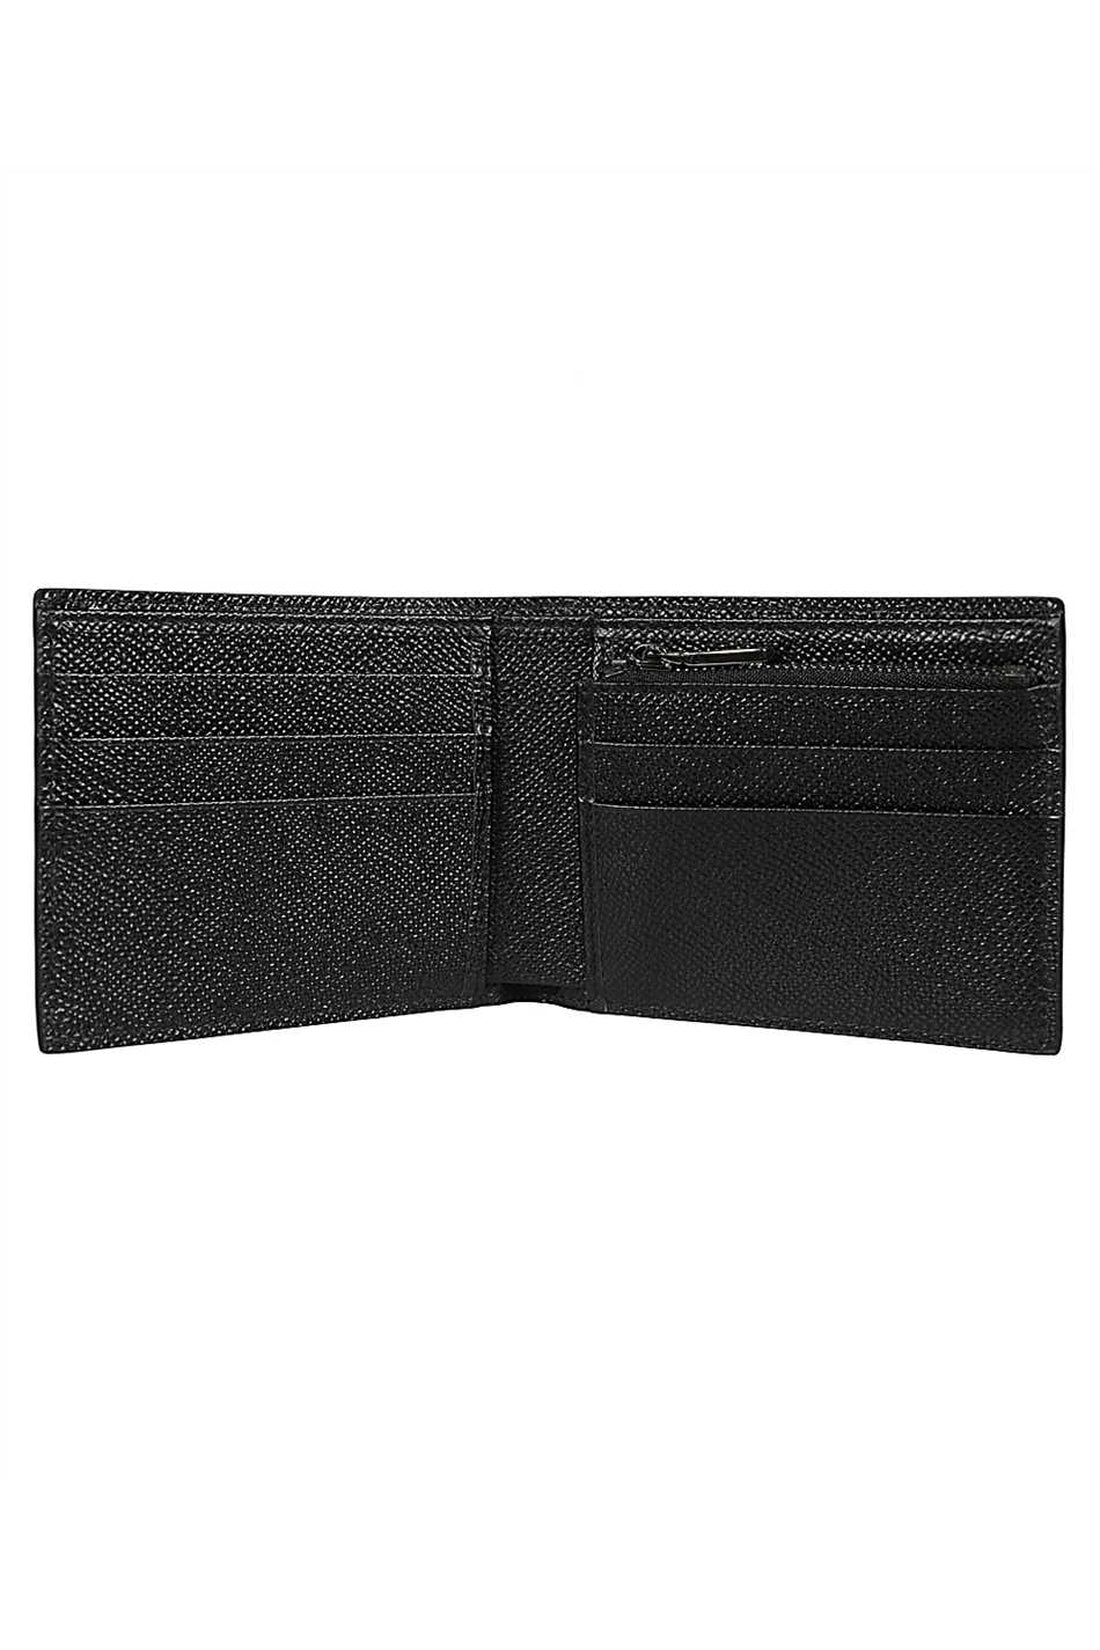 Dolce & Gabbana-OUTLET-SALE-Leather flap-over wallet-ARCHIVIST